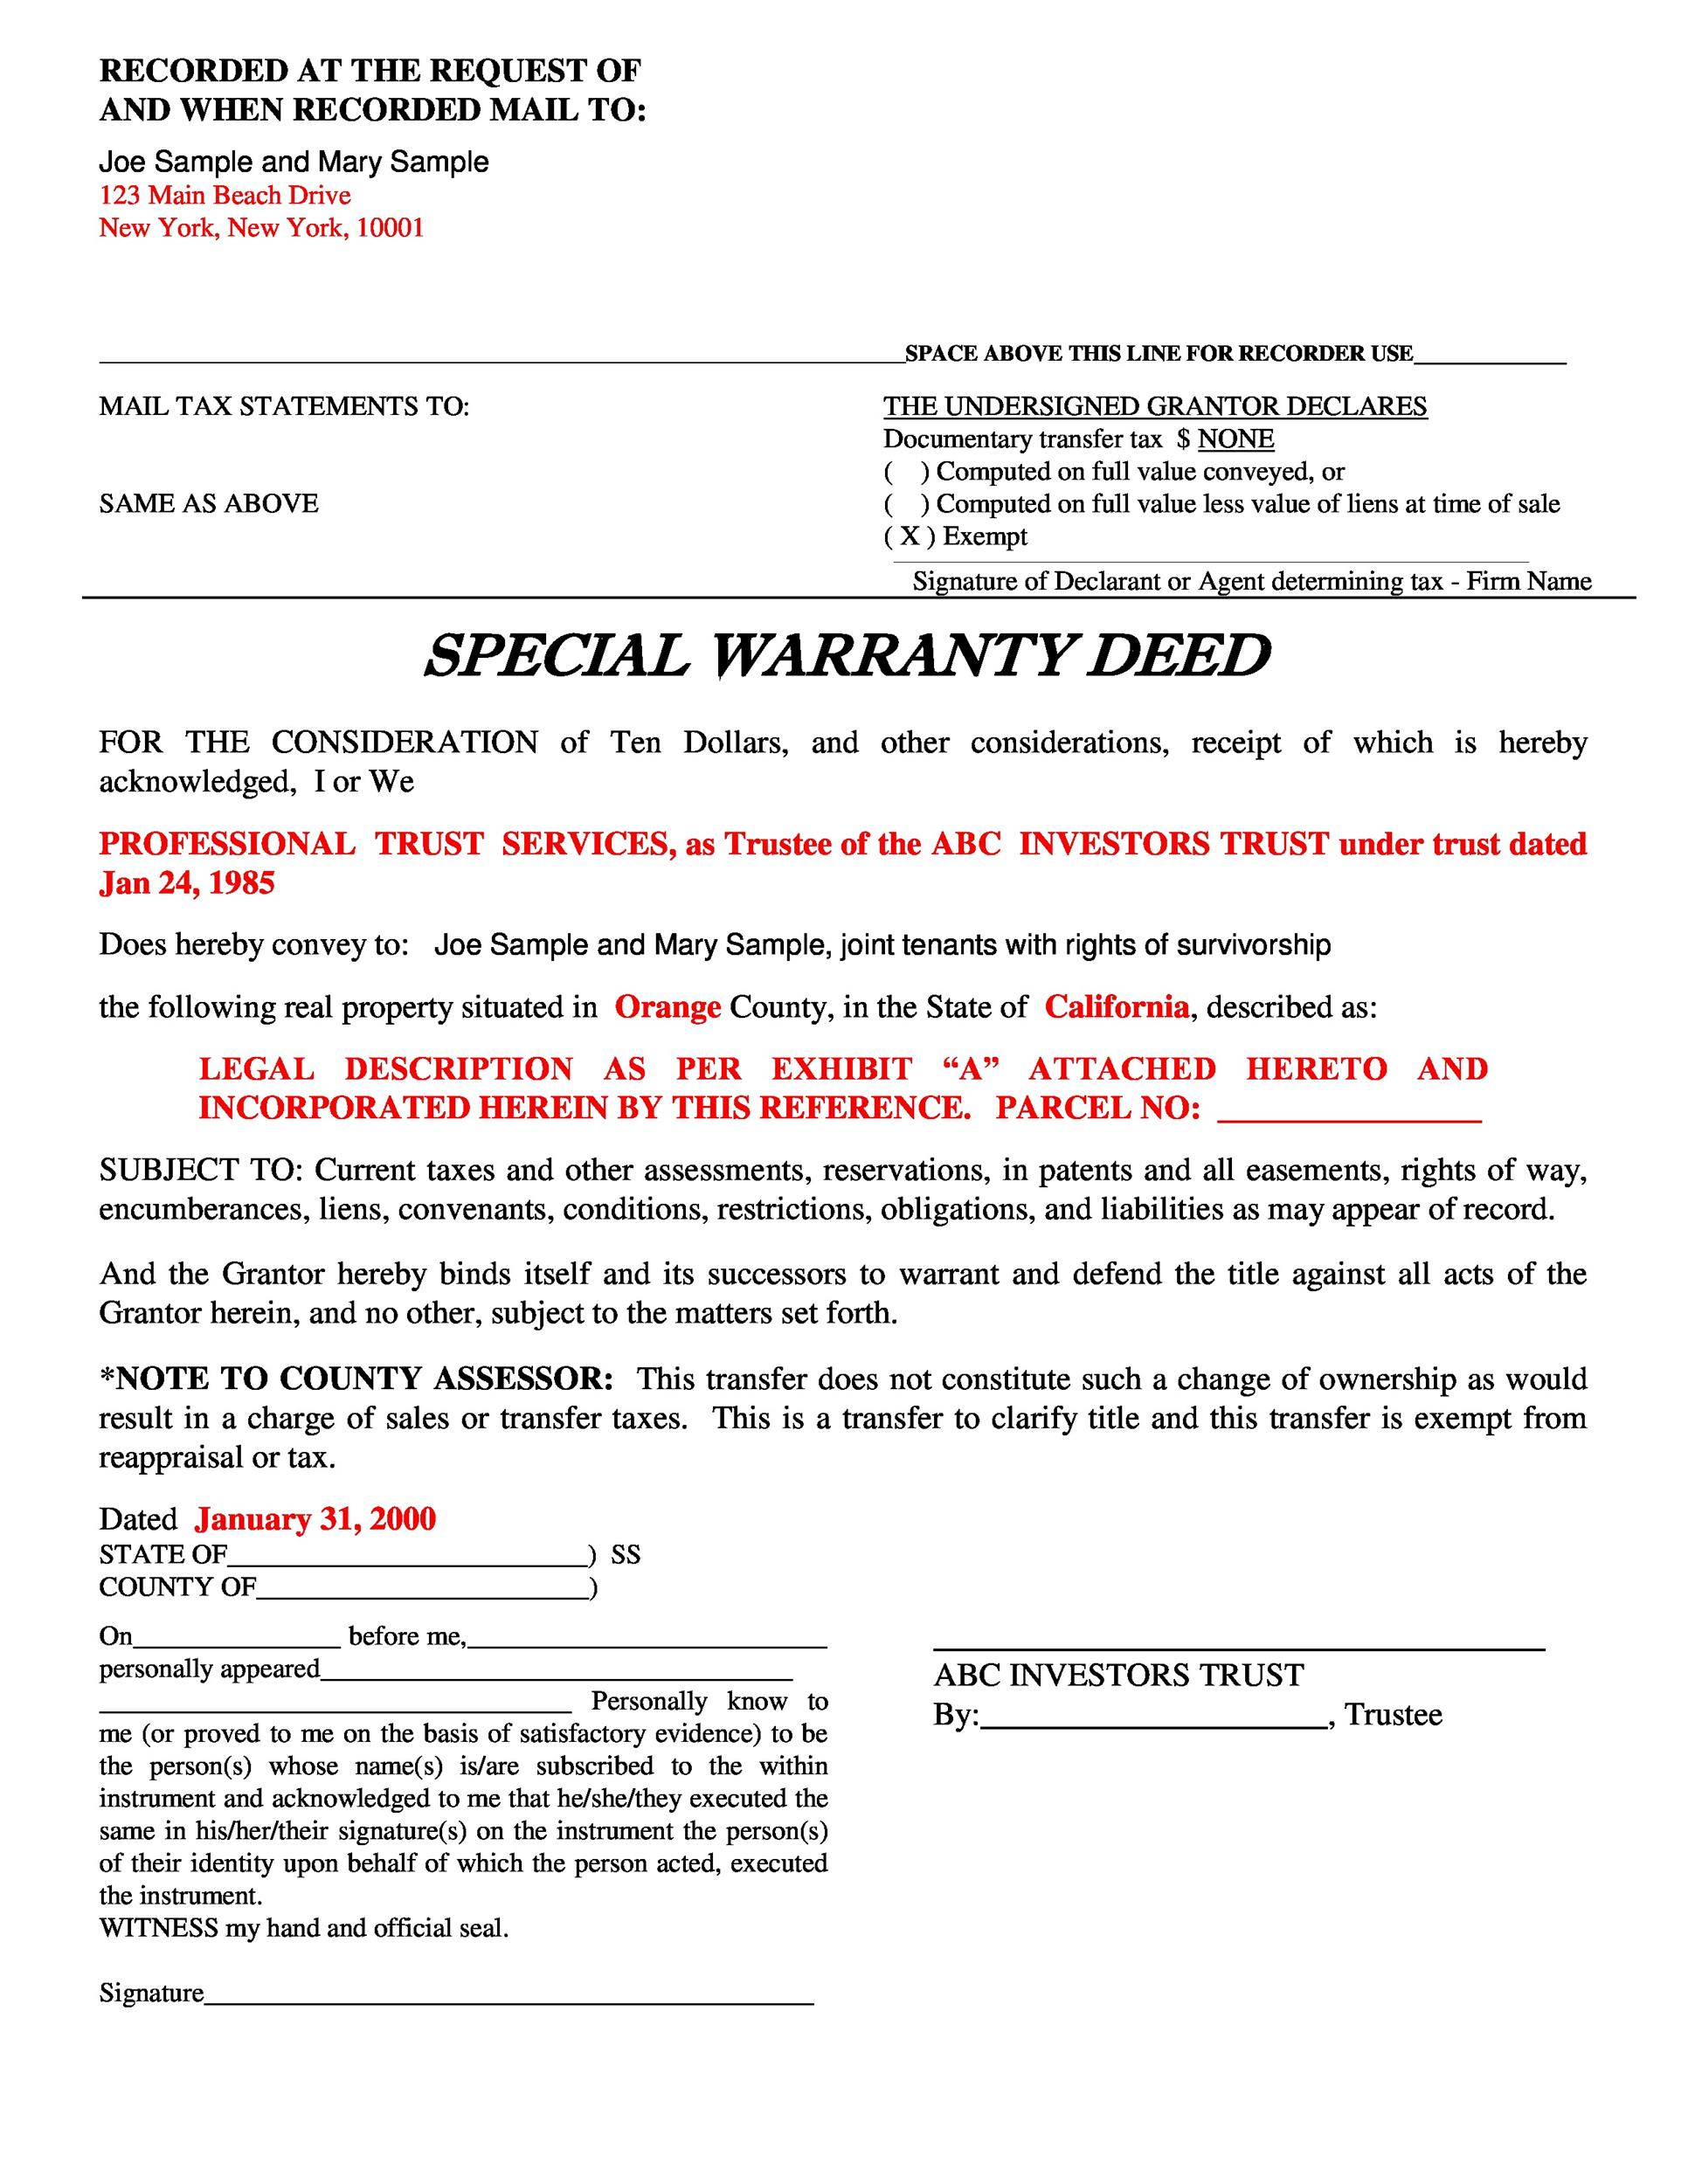 40  Warranty Deed Templates Forms (General Special) ᐅ TemplateLab